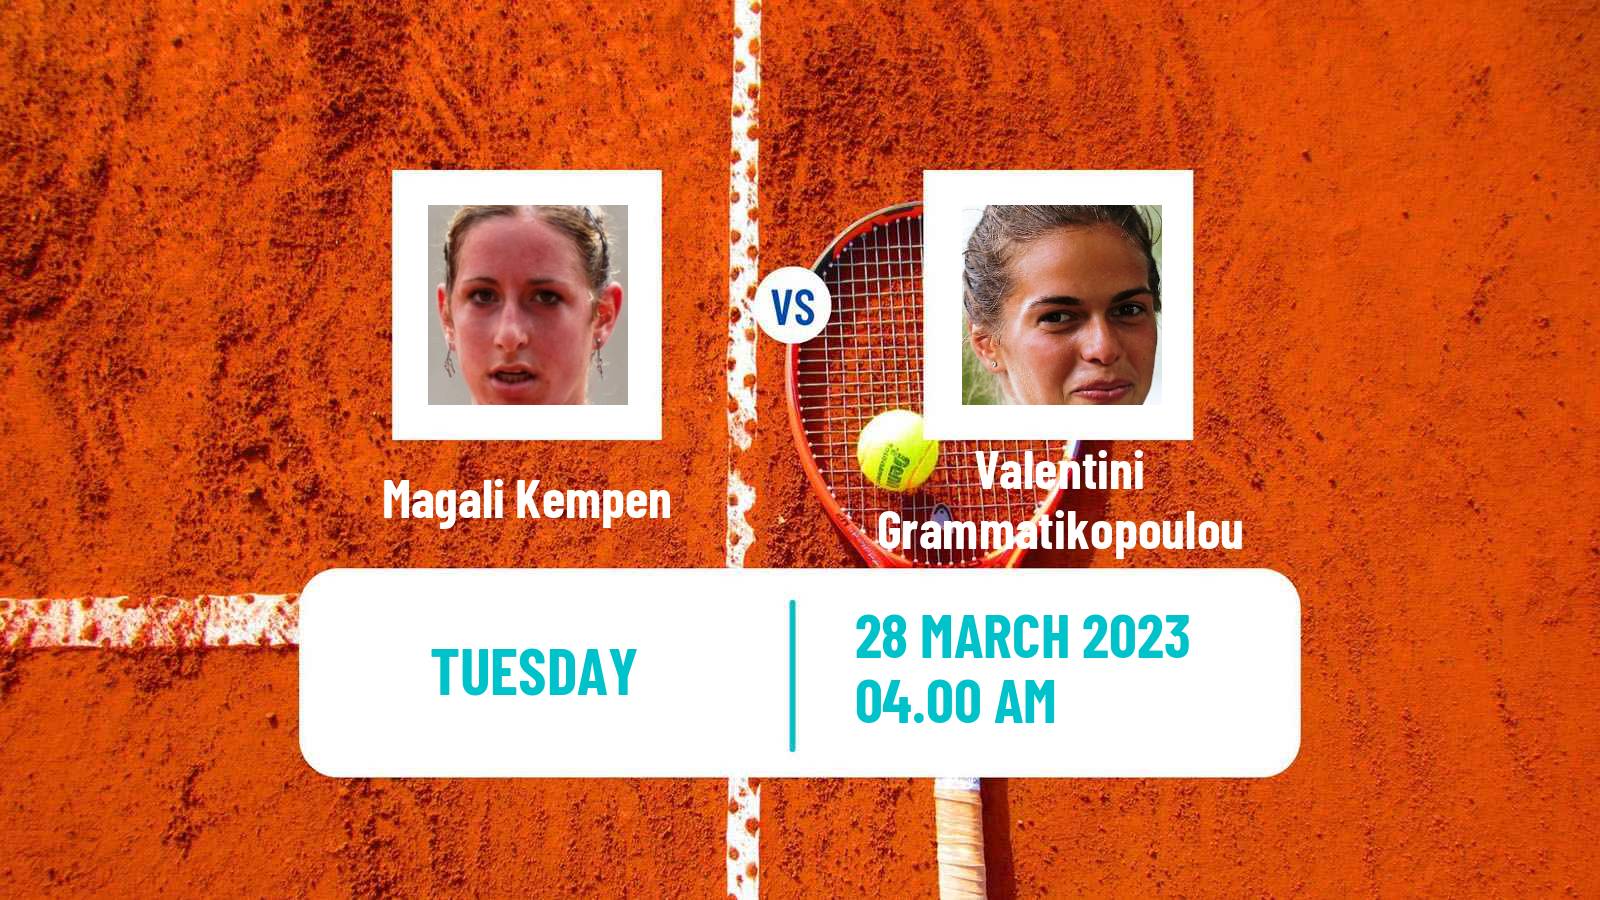 Tennis ITF Tournaments Magali Kempen - Valentini Grammatikopoulou